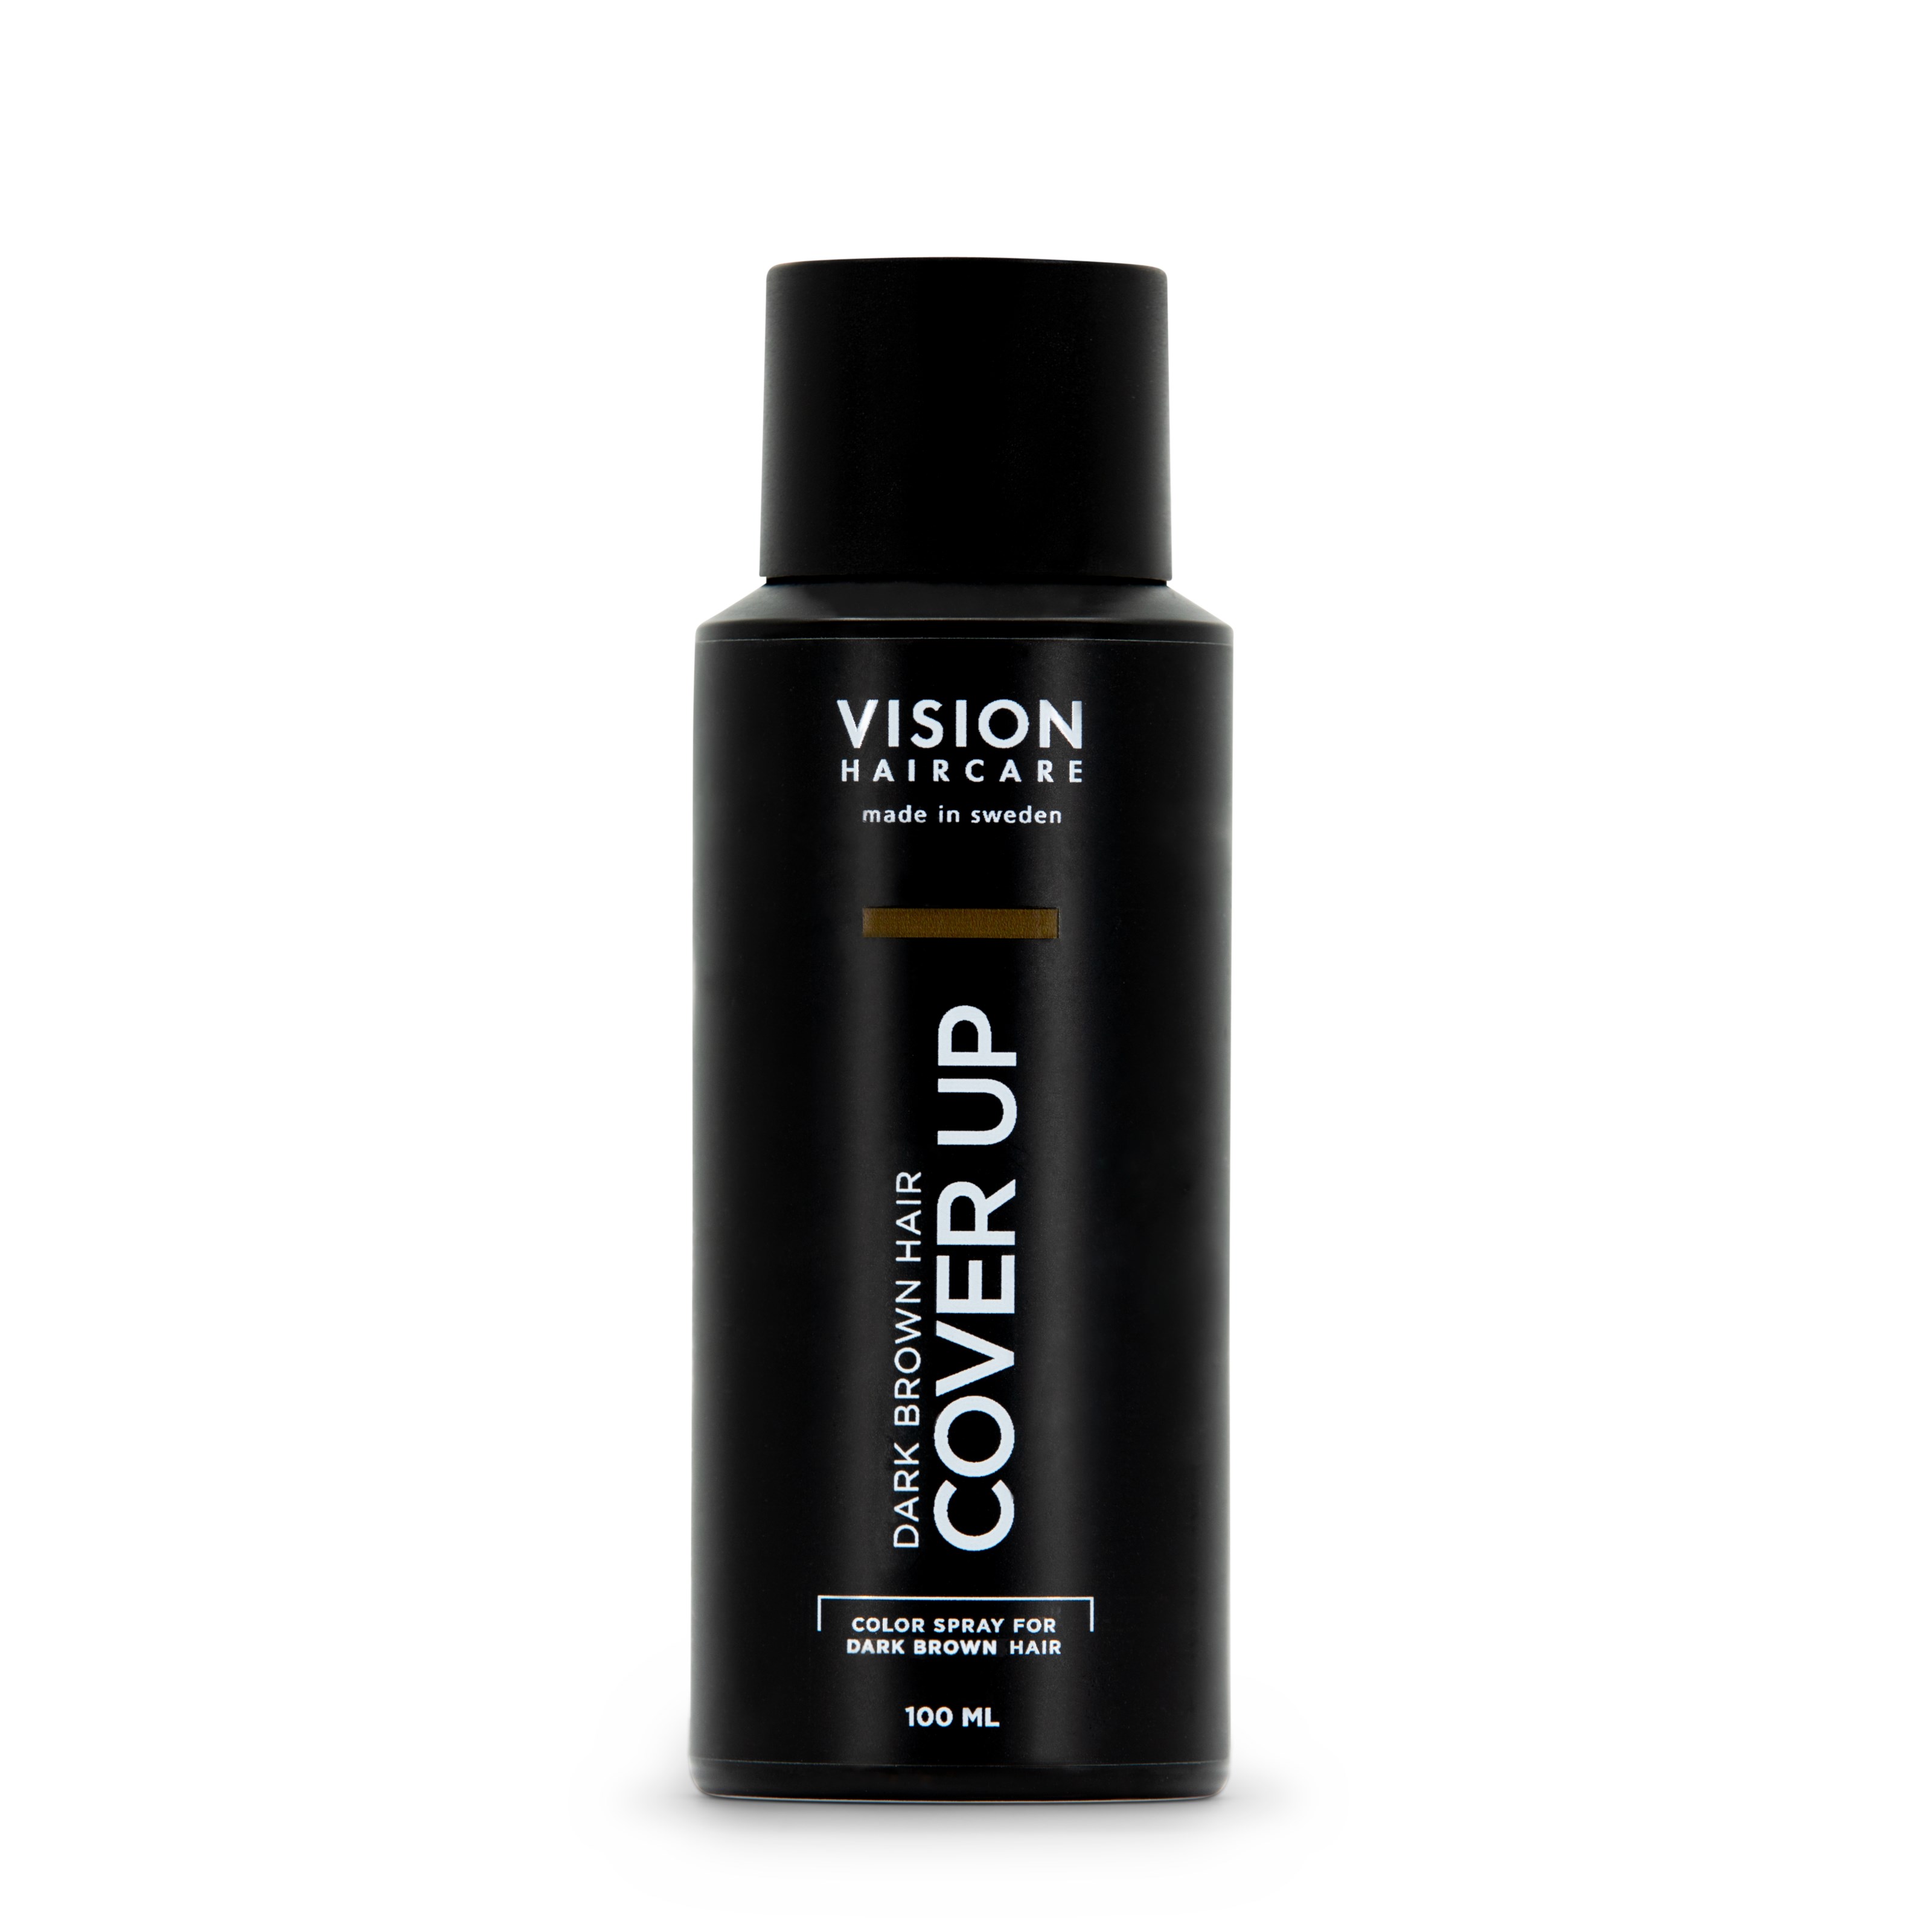 Läs mer om Vision Haircare Cover Up Mörkbrun